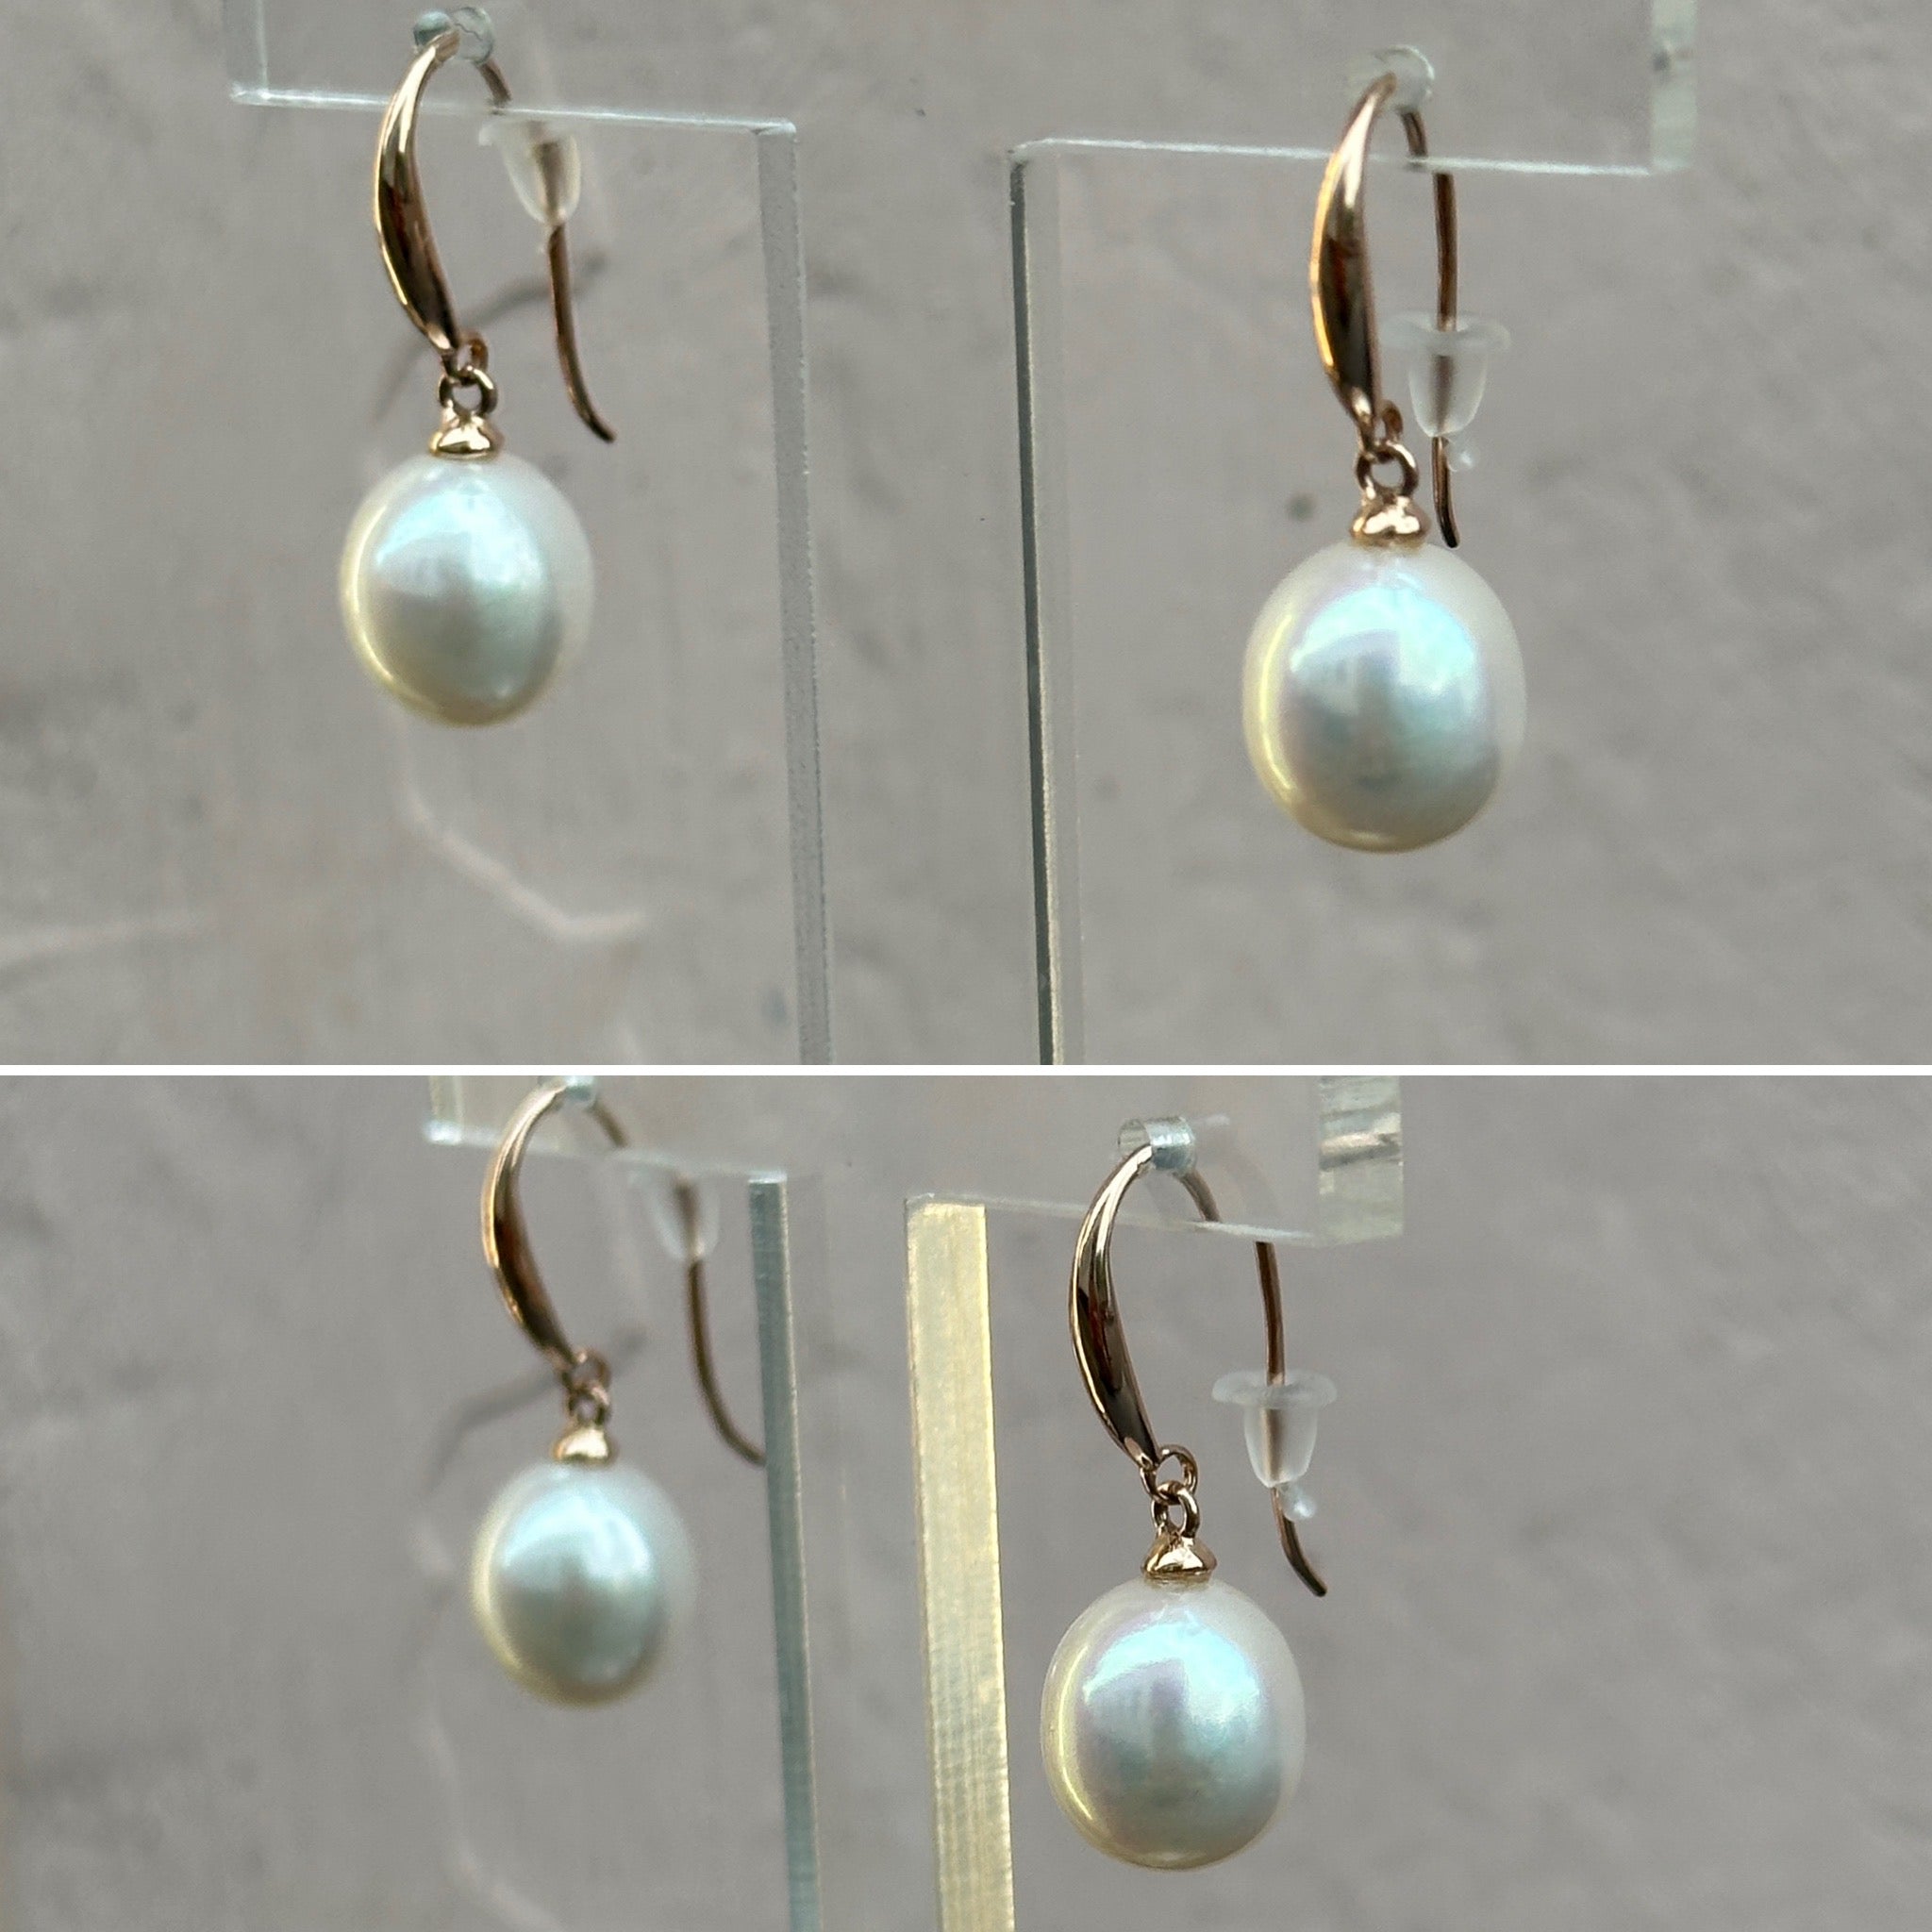 9ct Rose Gold Pearl Earrings